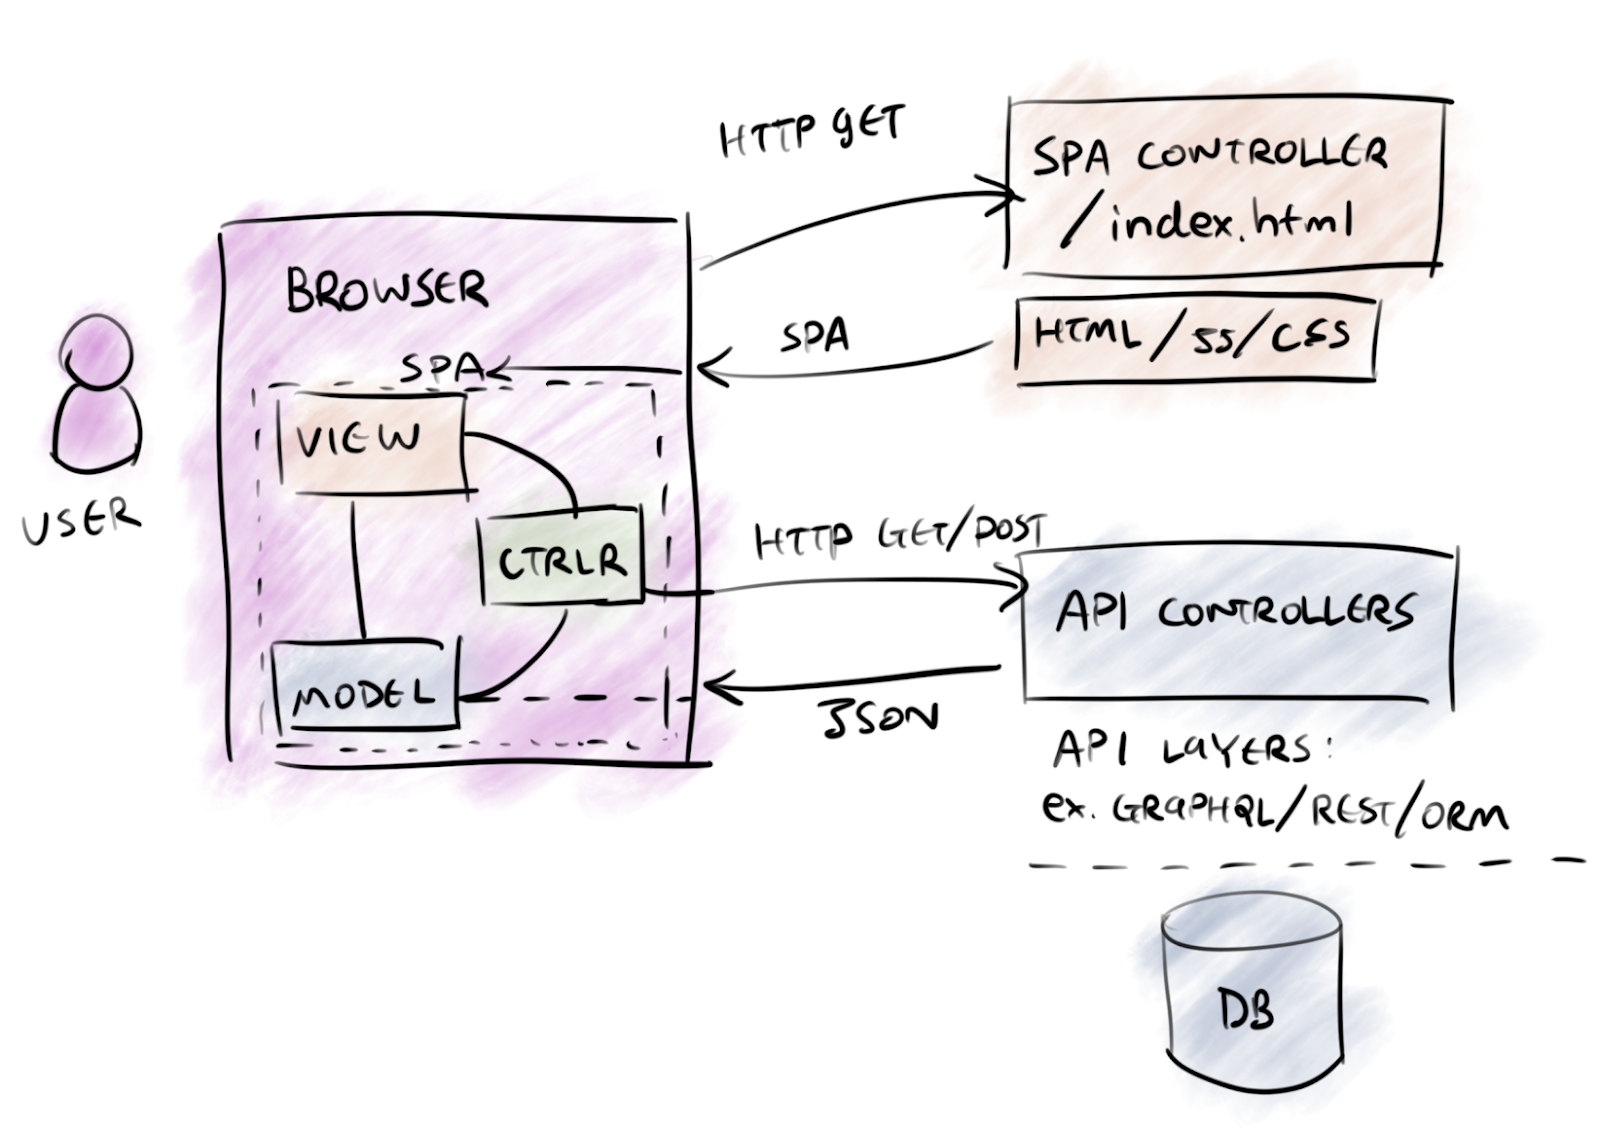 Views as API controllers